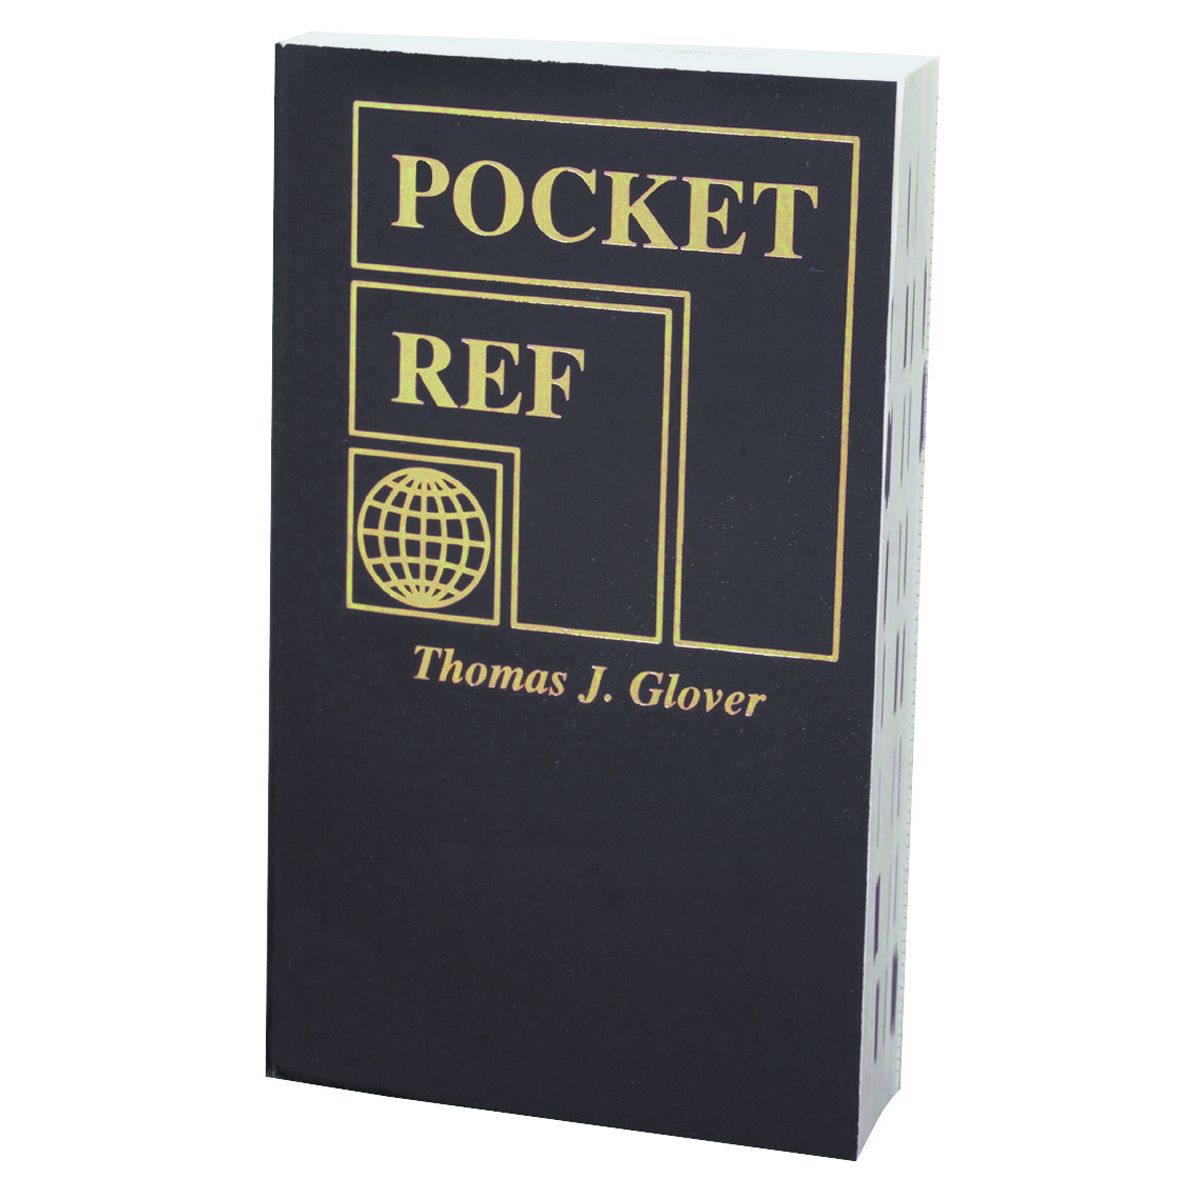 SEQUOIA PUBLISHING Pocket Ref Third Edition